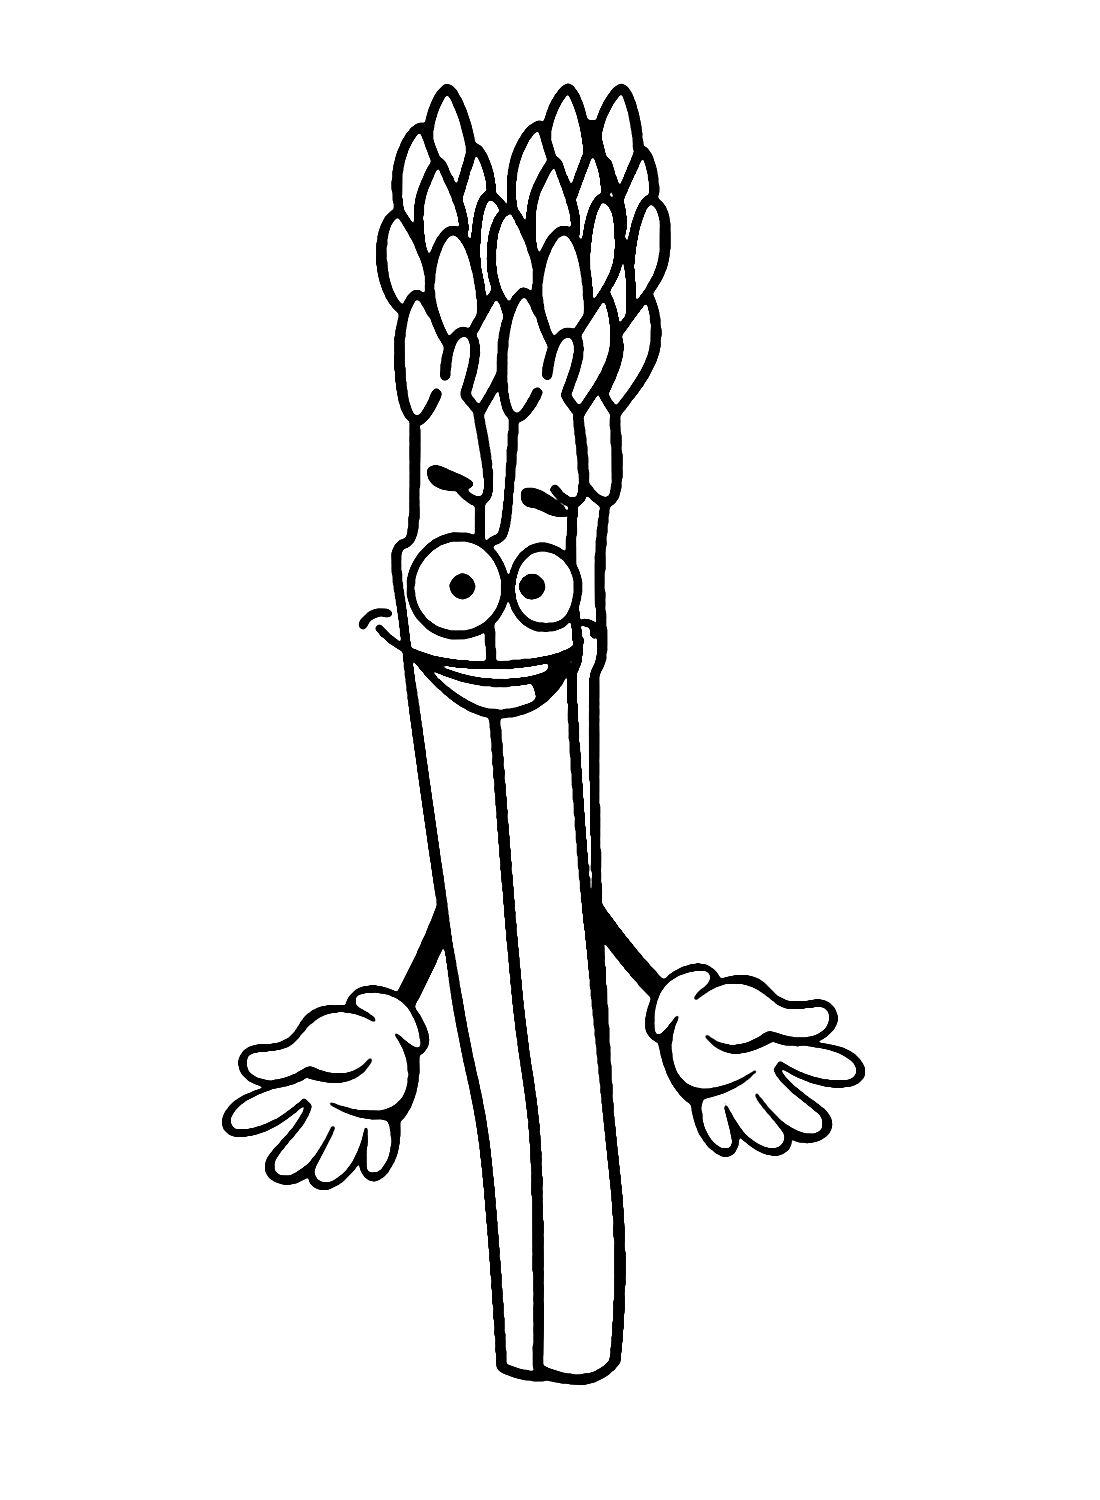 Cute Asparagus Cartoon Coloring Page